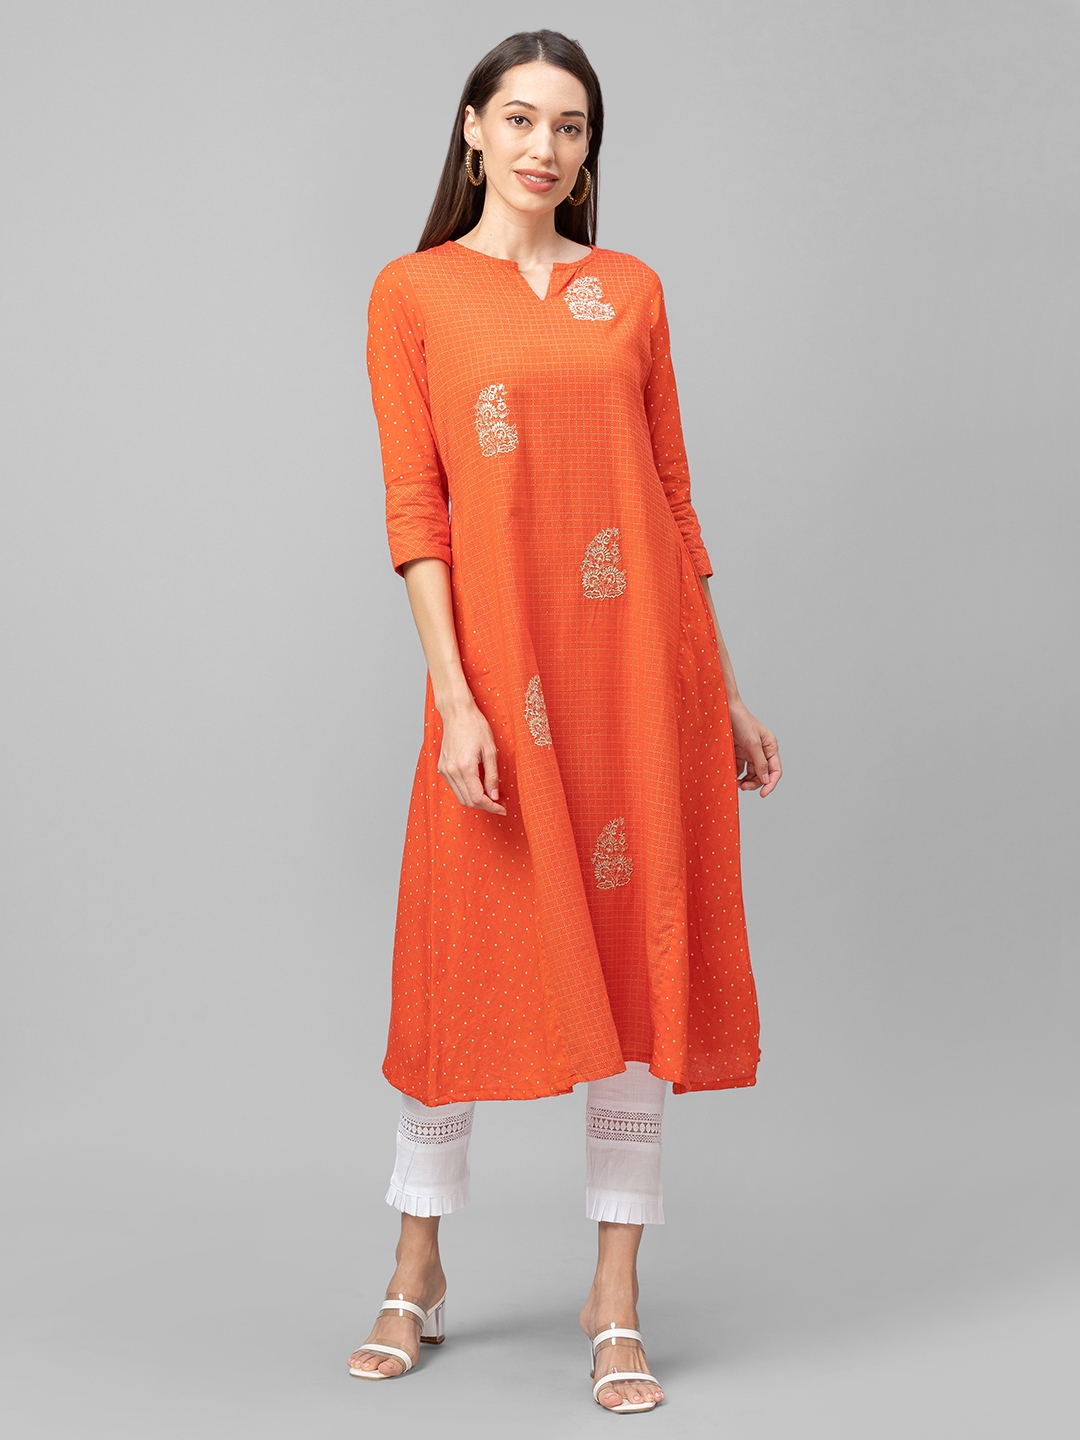 globus | Women's Orange Cotton Printed Kurtas 0